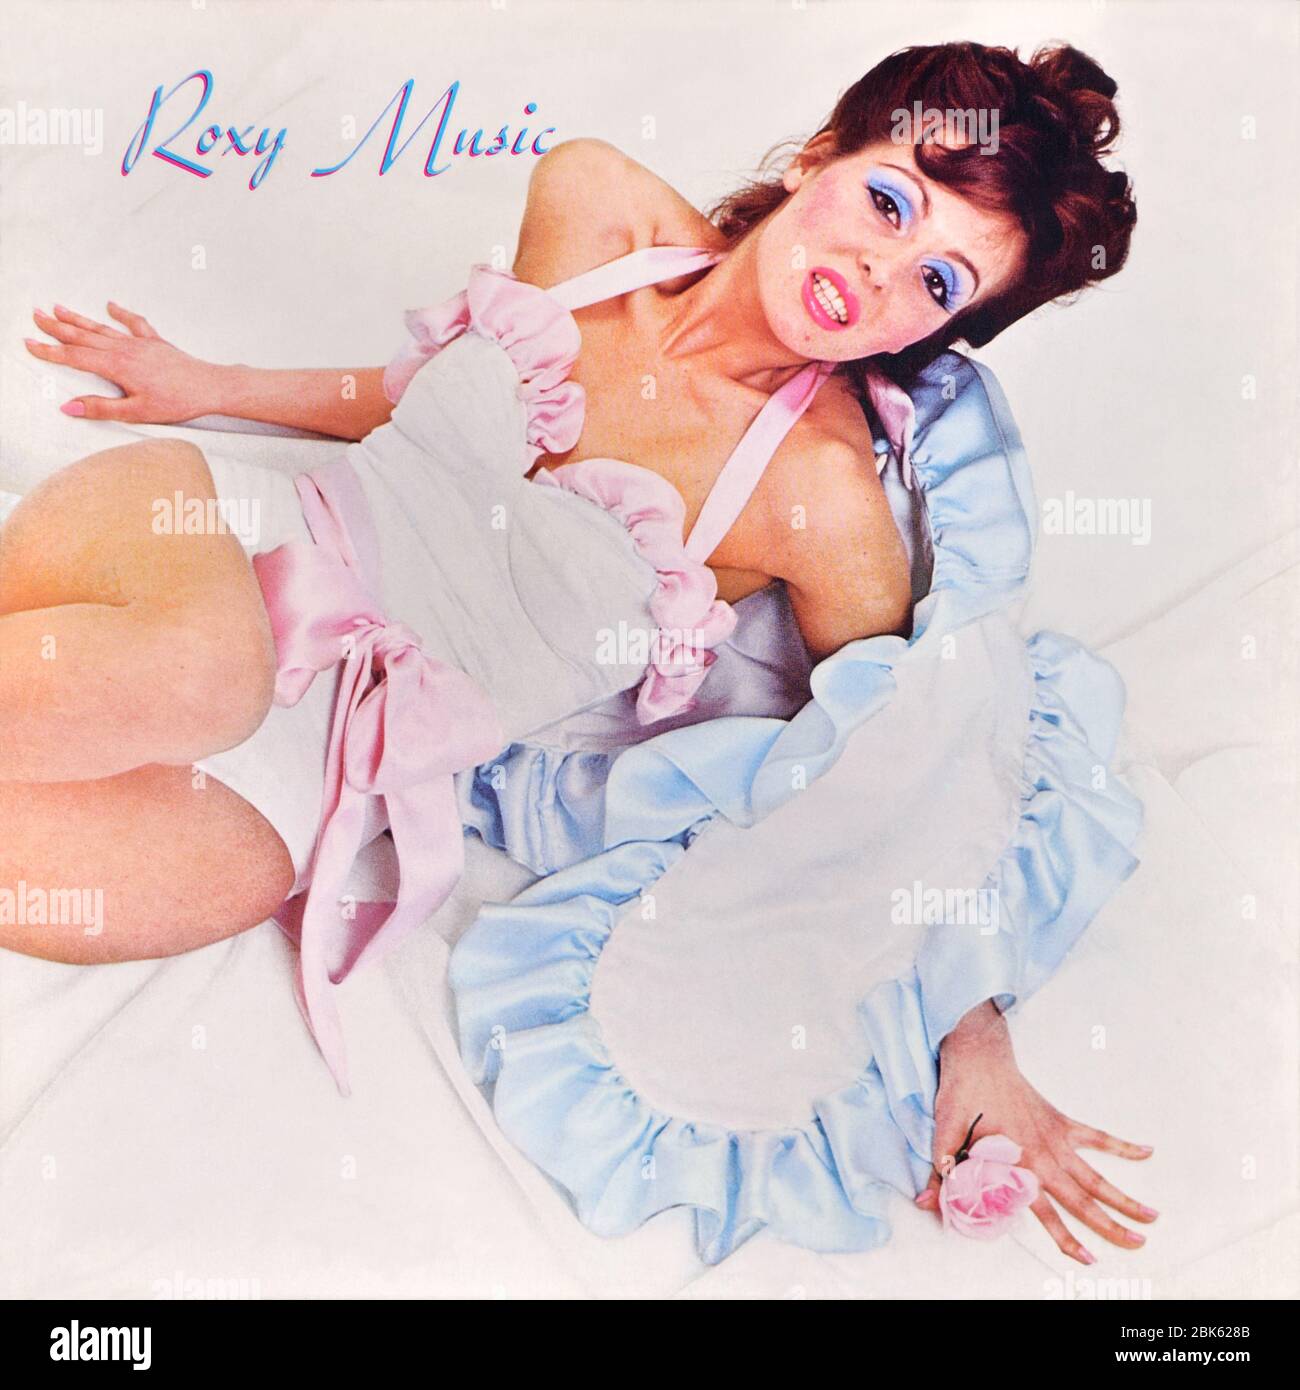 Roxy Music - original Vinyl Album Cover - Roxy Music - 1972 Stockfoto